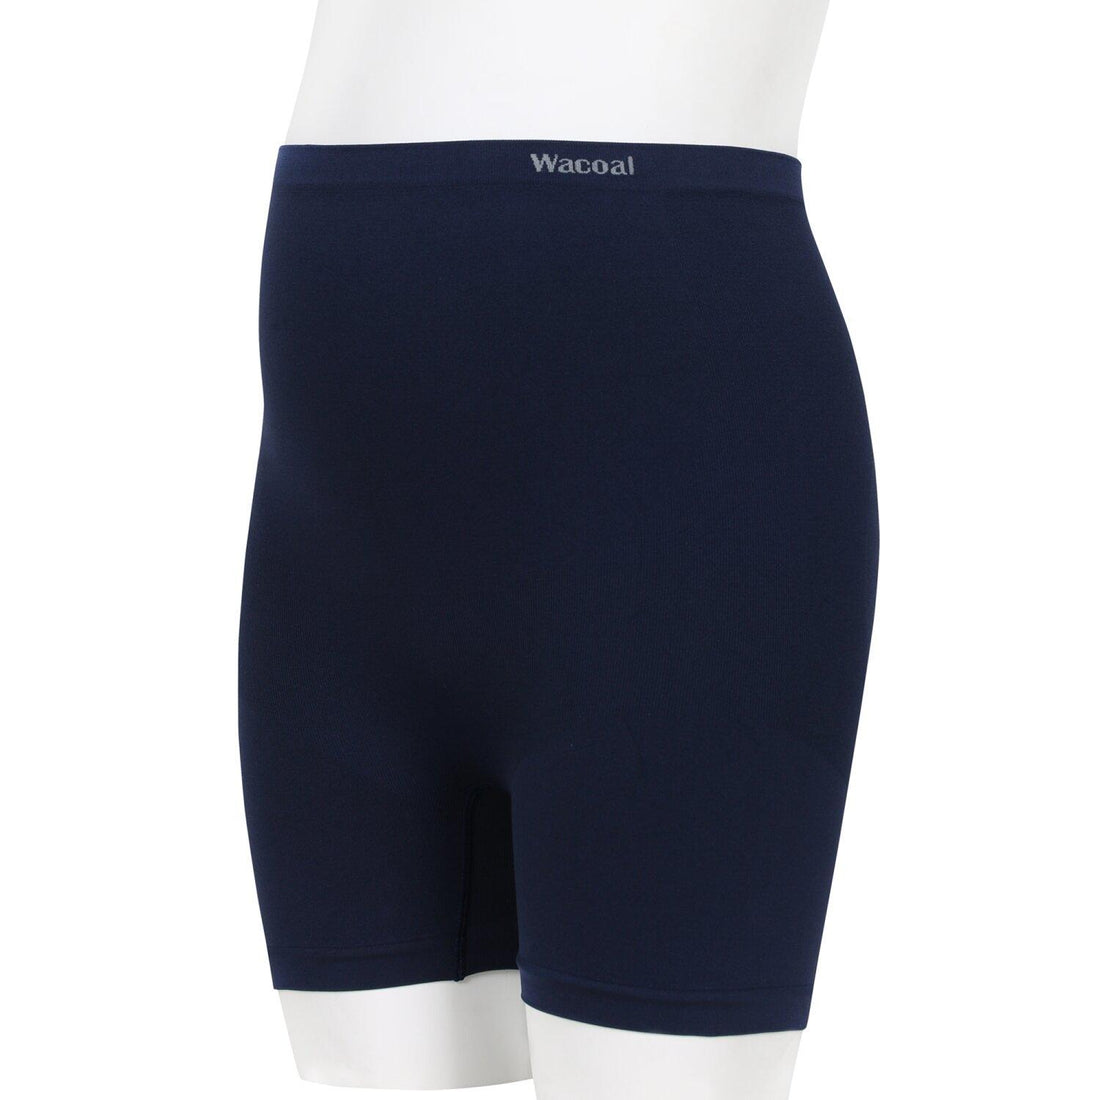 Wacoal Maternity Body Seamless Maternity Underwear, long leg pattern, model WM6546, blue (BU)